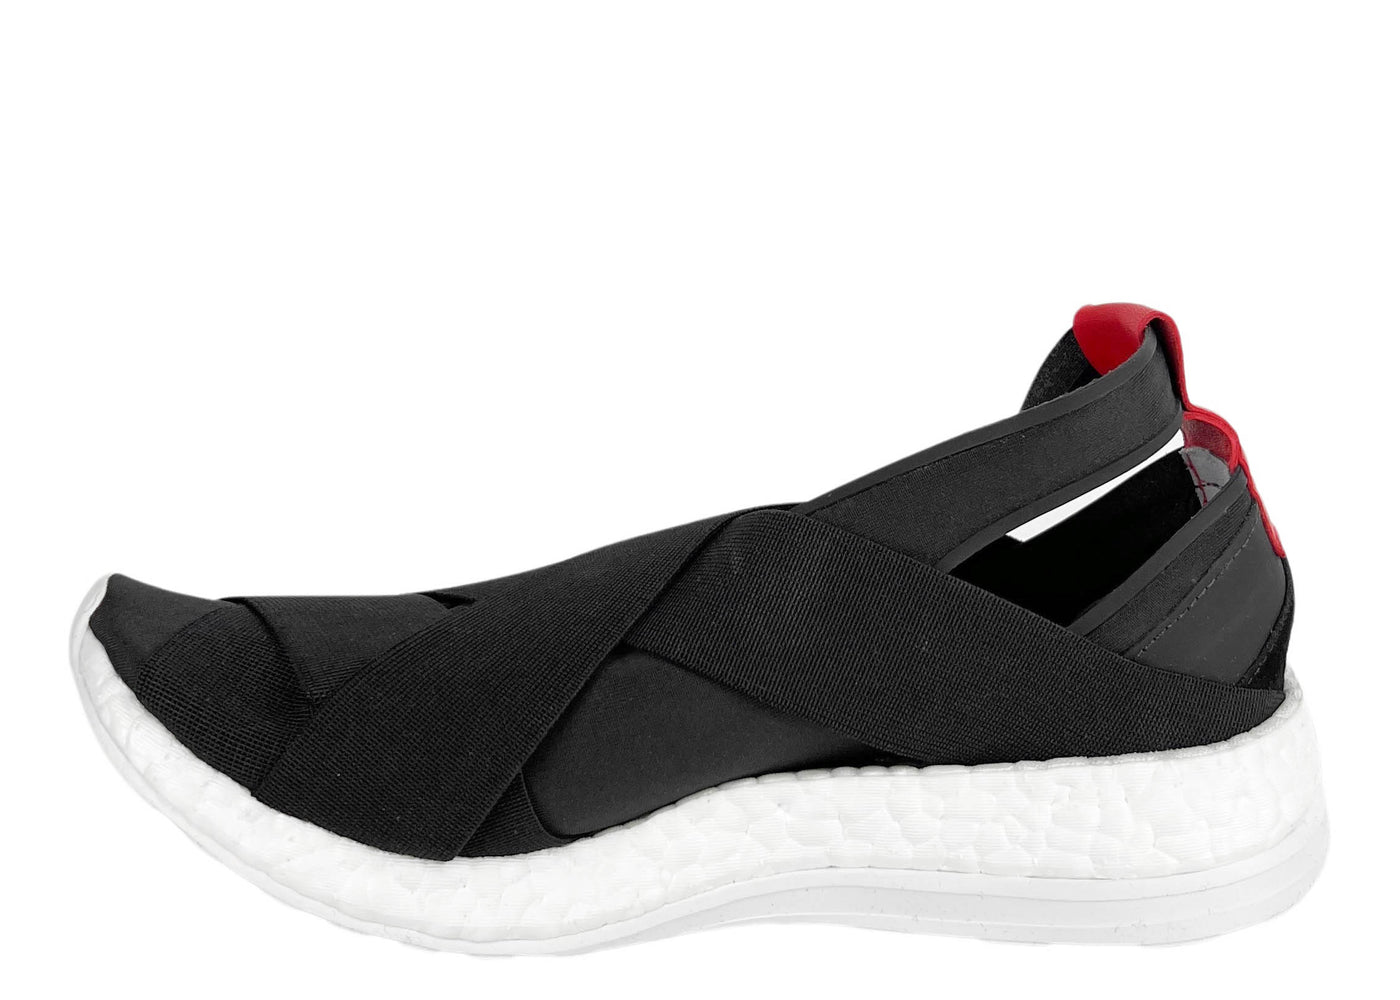 Adidas Y-3 Yohji Yamamoto Dansu Boost Sneakers in Black - Discounts on Y-3 at UAL